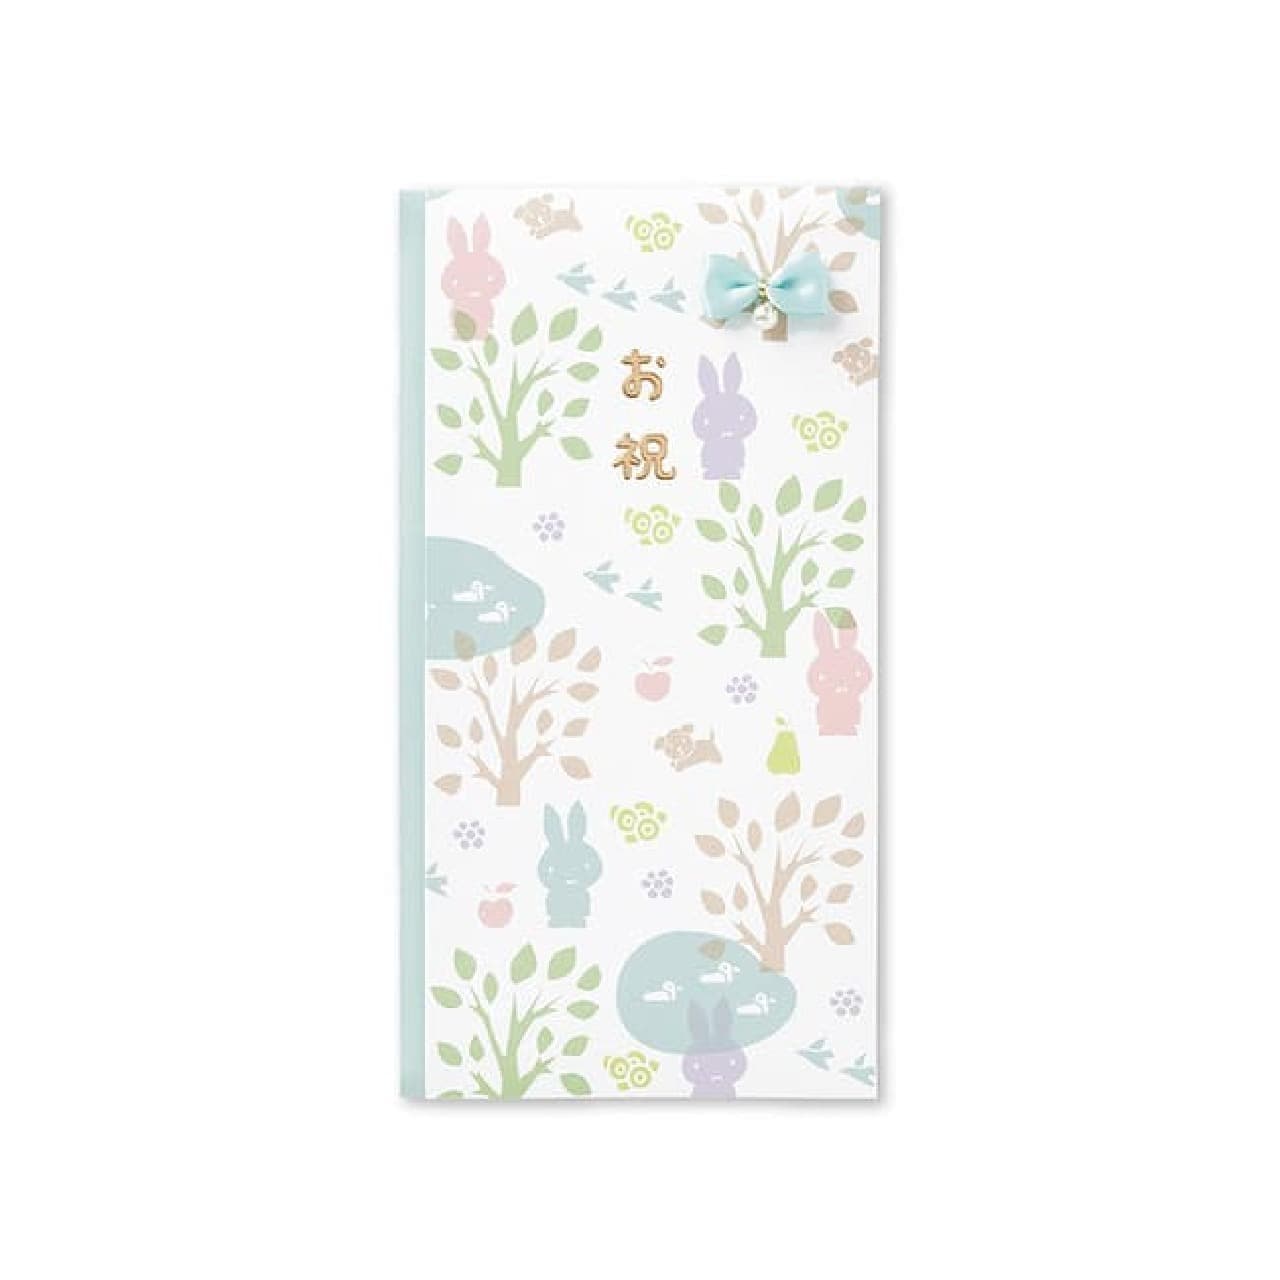 New design of "Miffy Tatto / Pochibukuro" --For birthday celebrations and baby gifts! Cute ribbon decorations